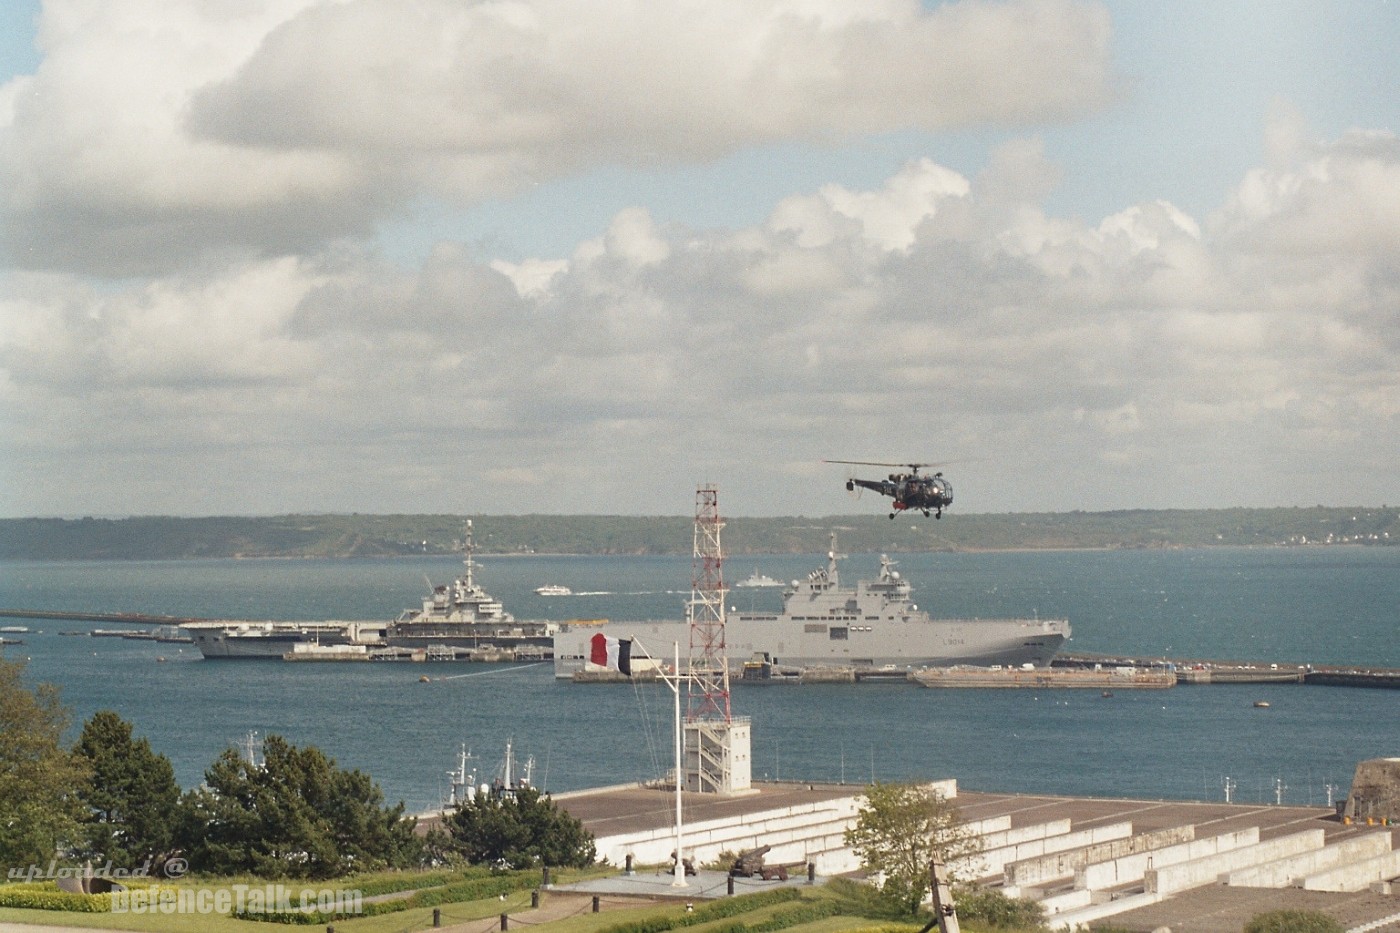 Brest Shipyard - France